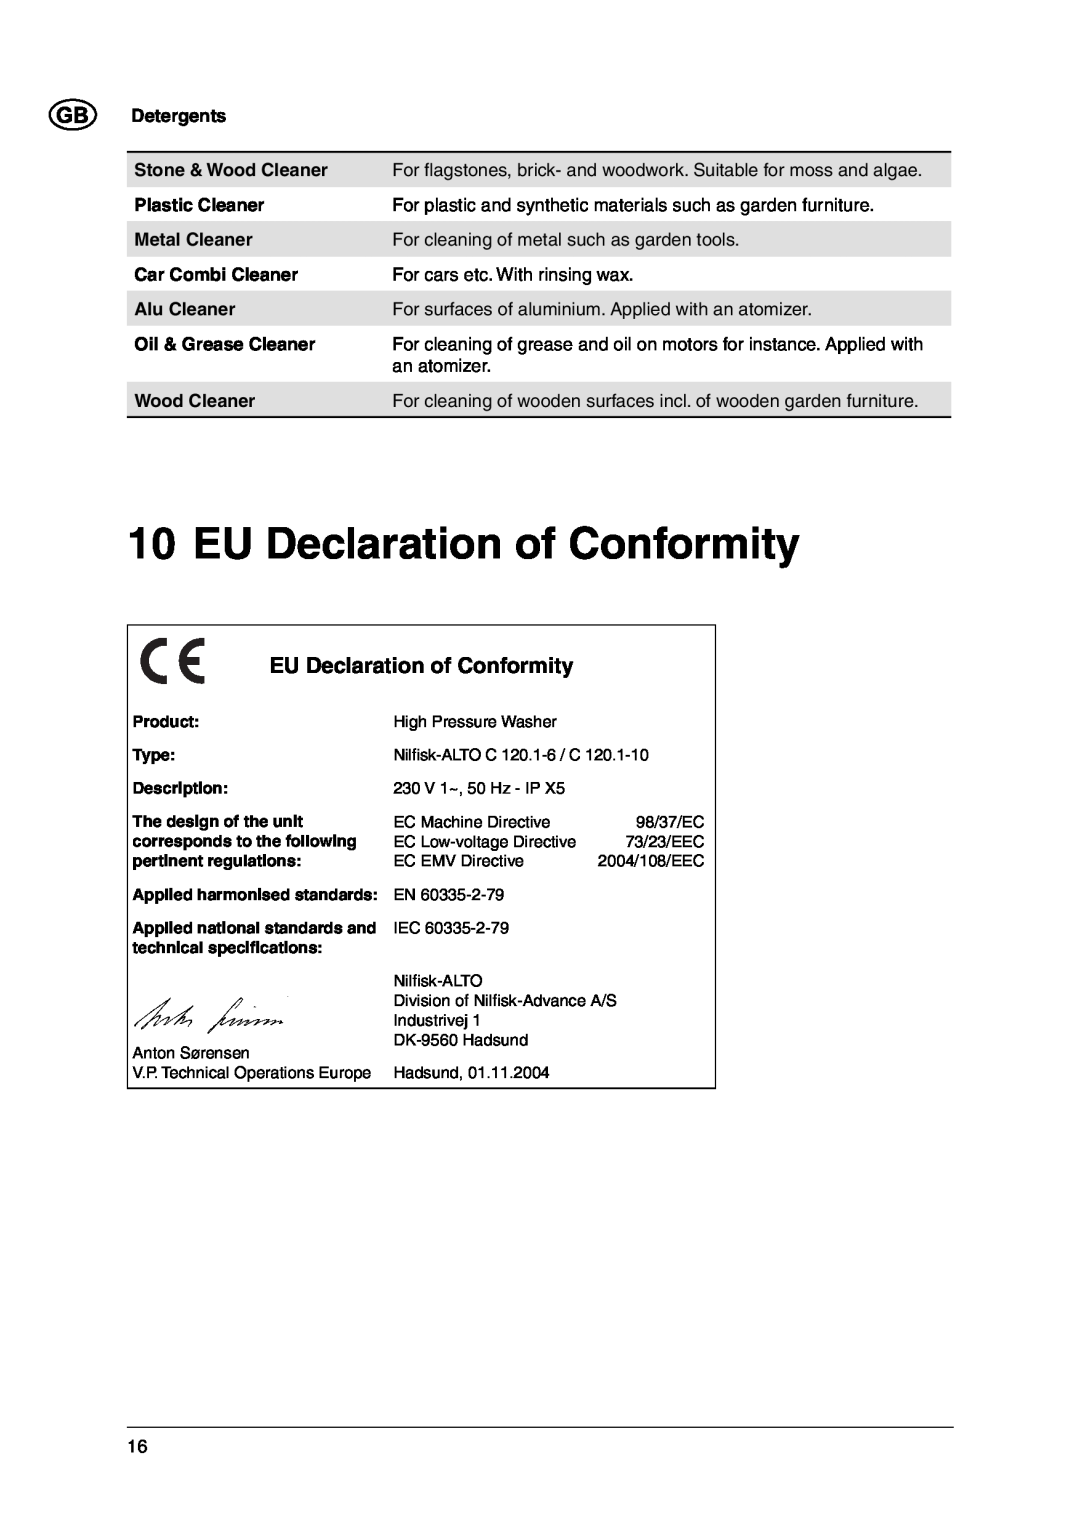 Nilfisk-ALTO C 120.1 EU Declaration of Conformity, Detergents, Stone & Wood Cleaner, Plastic Cleaner, Metal Cleaner, Type 